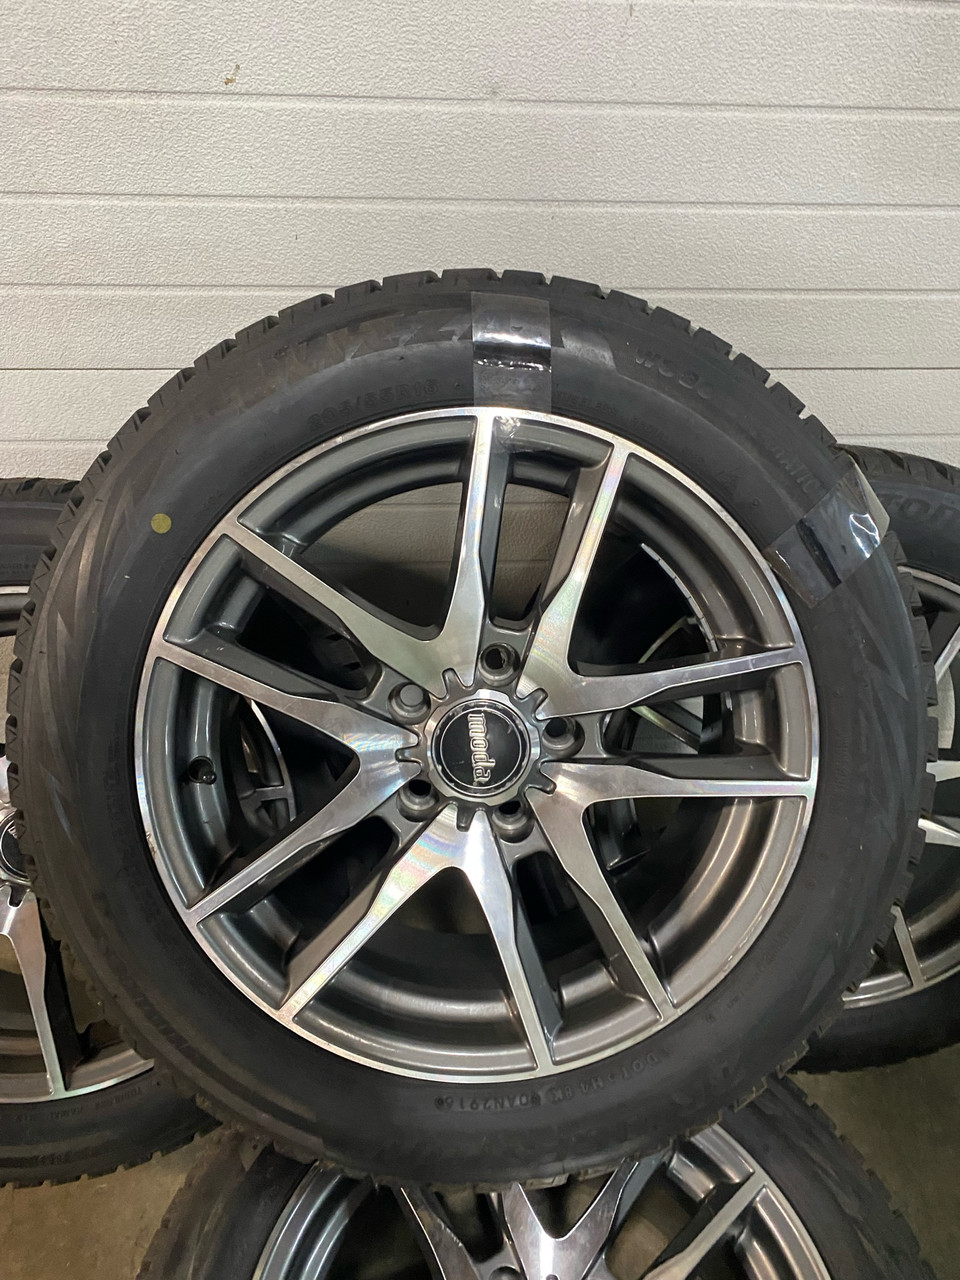 USED Bridgestone Blizzak Wheels & Tires